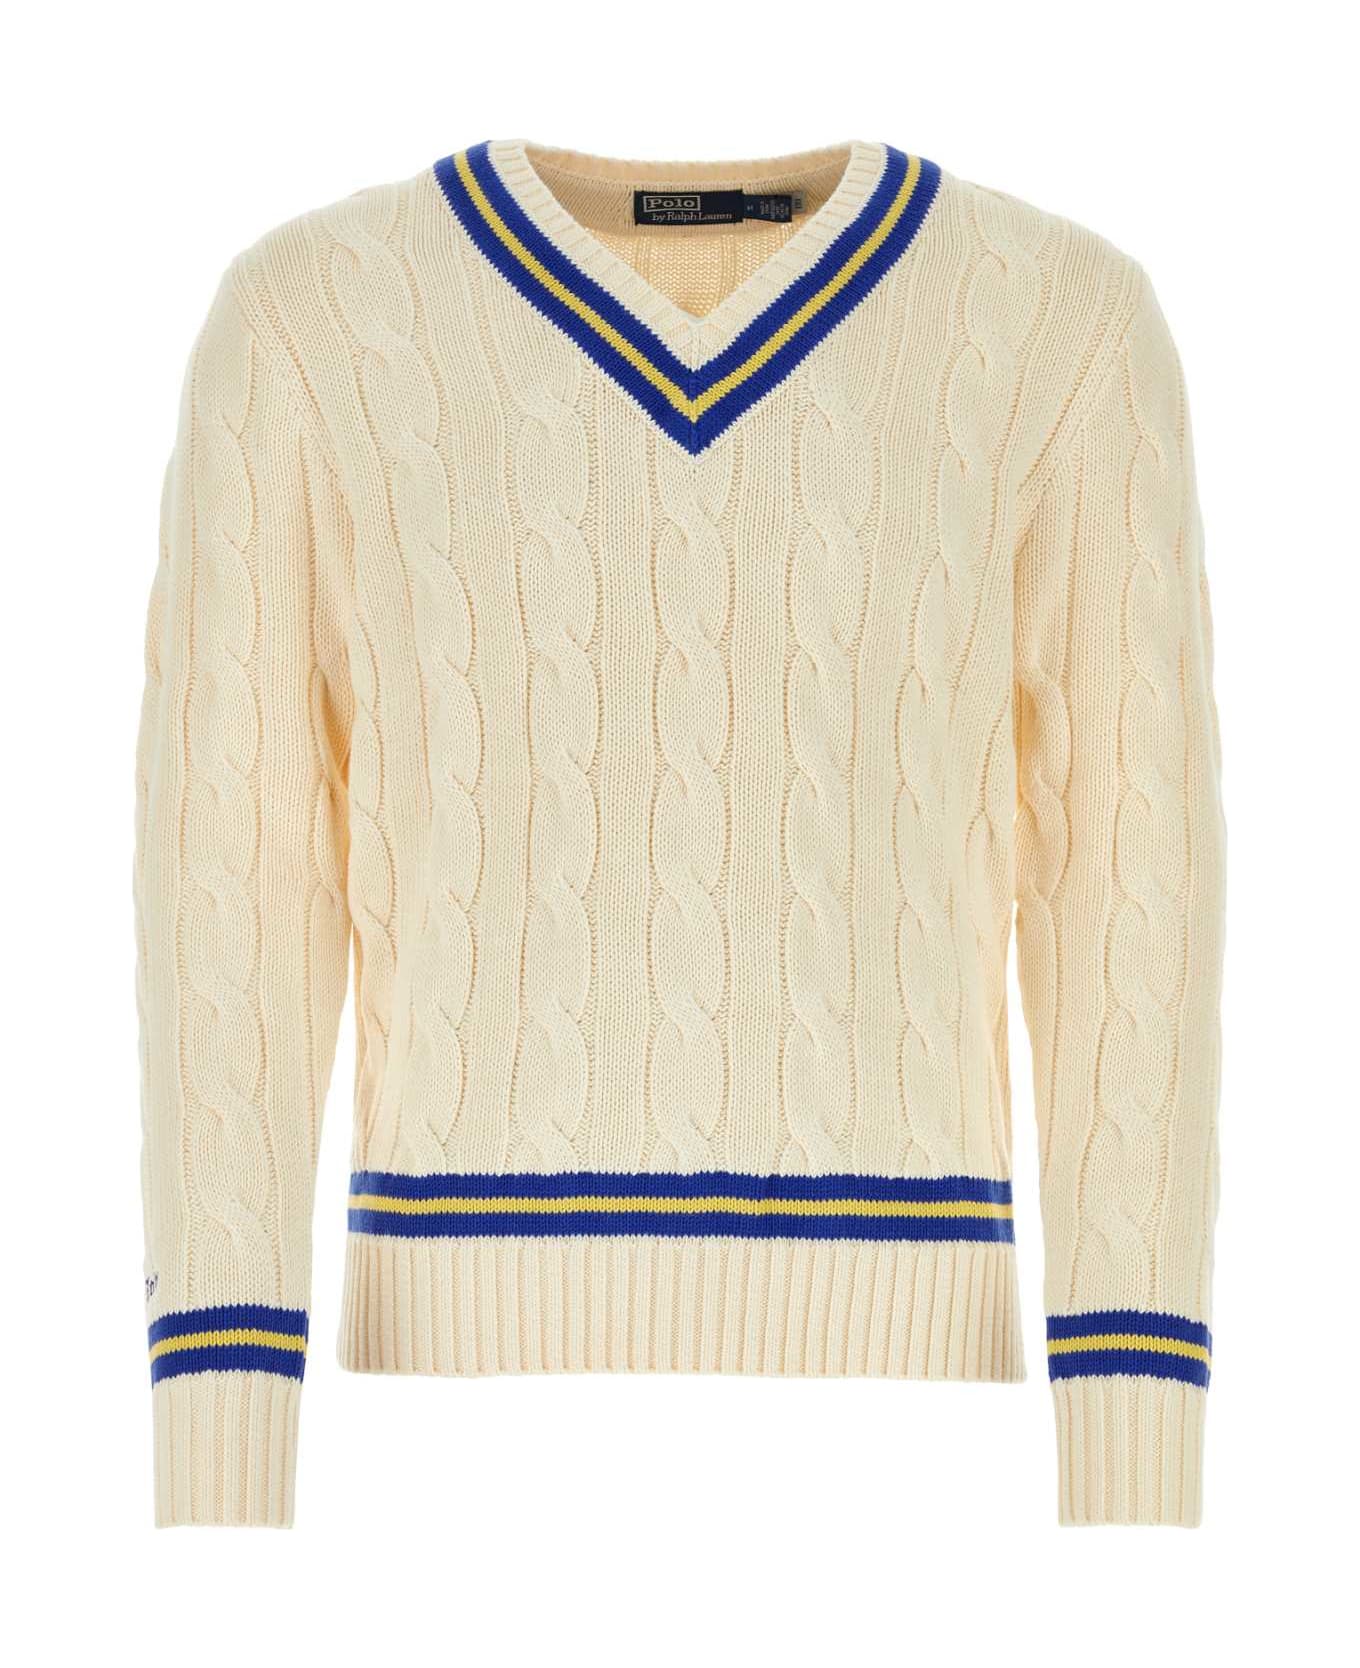 Polo Ralph Lauren Cream Cotton Sweater - CREAM